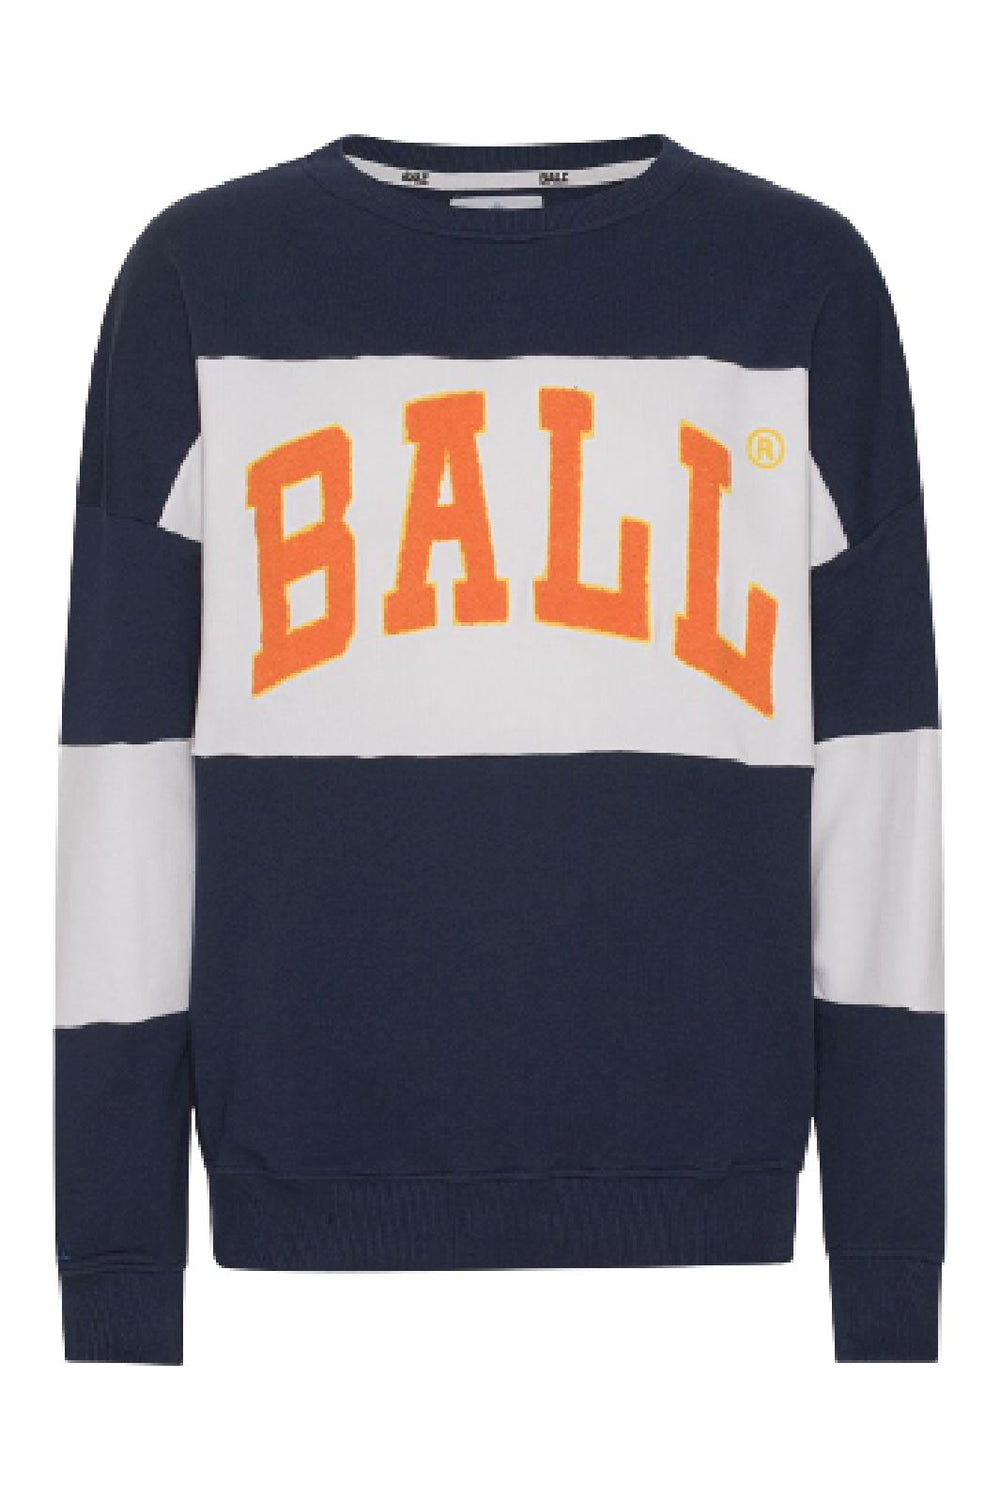 Ball - O. Zidney - Midnight Sweatshirts 